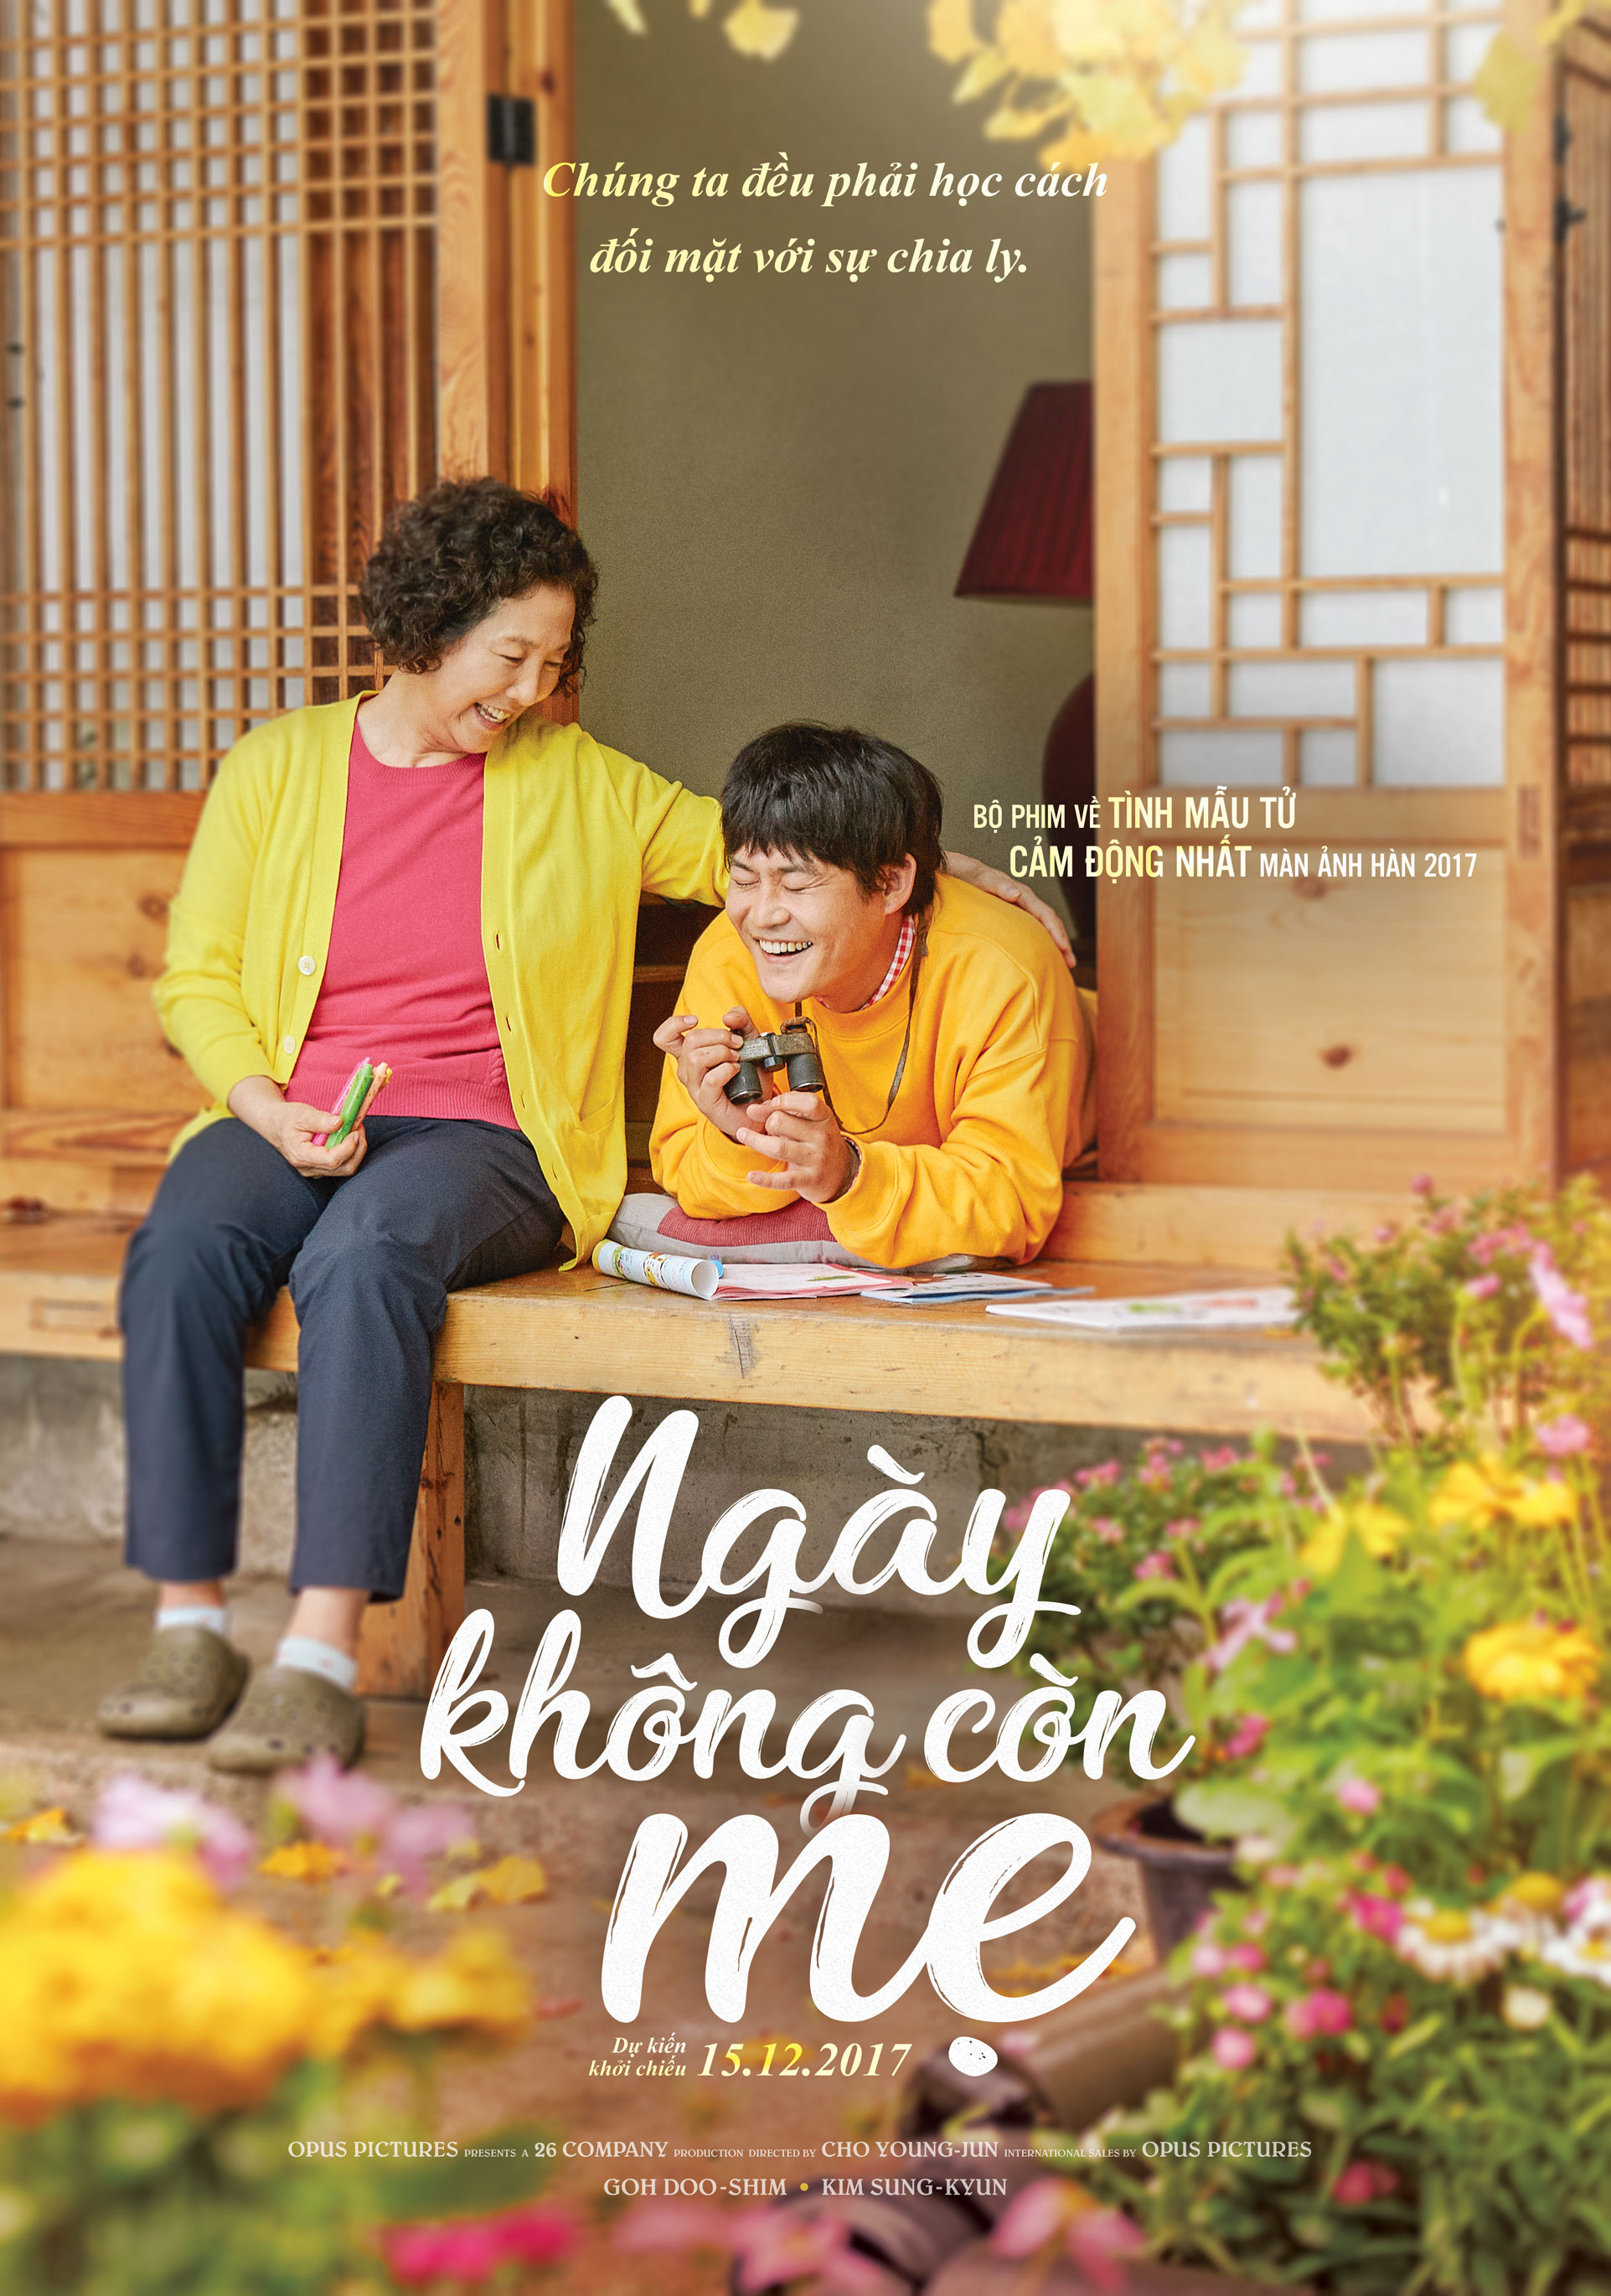 NGAY KHONG CON ME - teaser poster